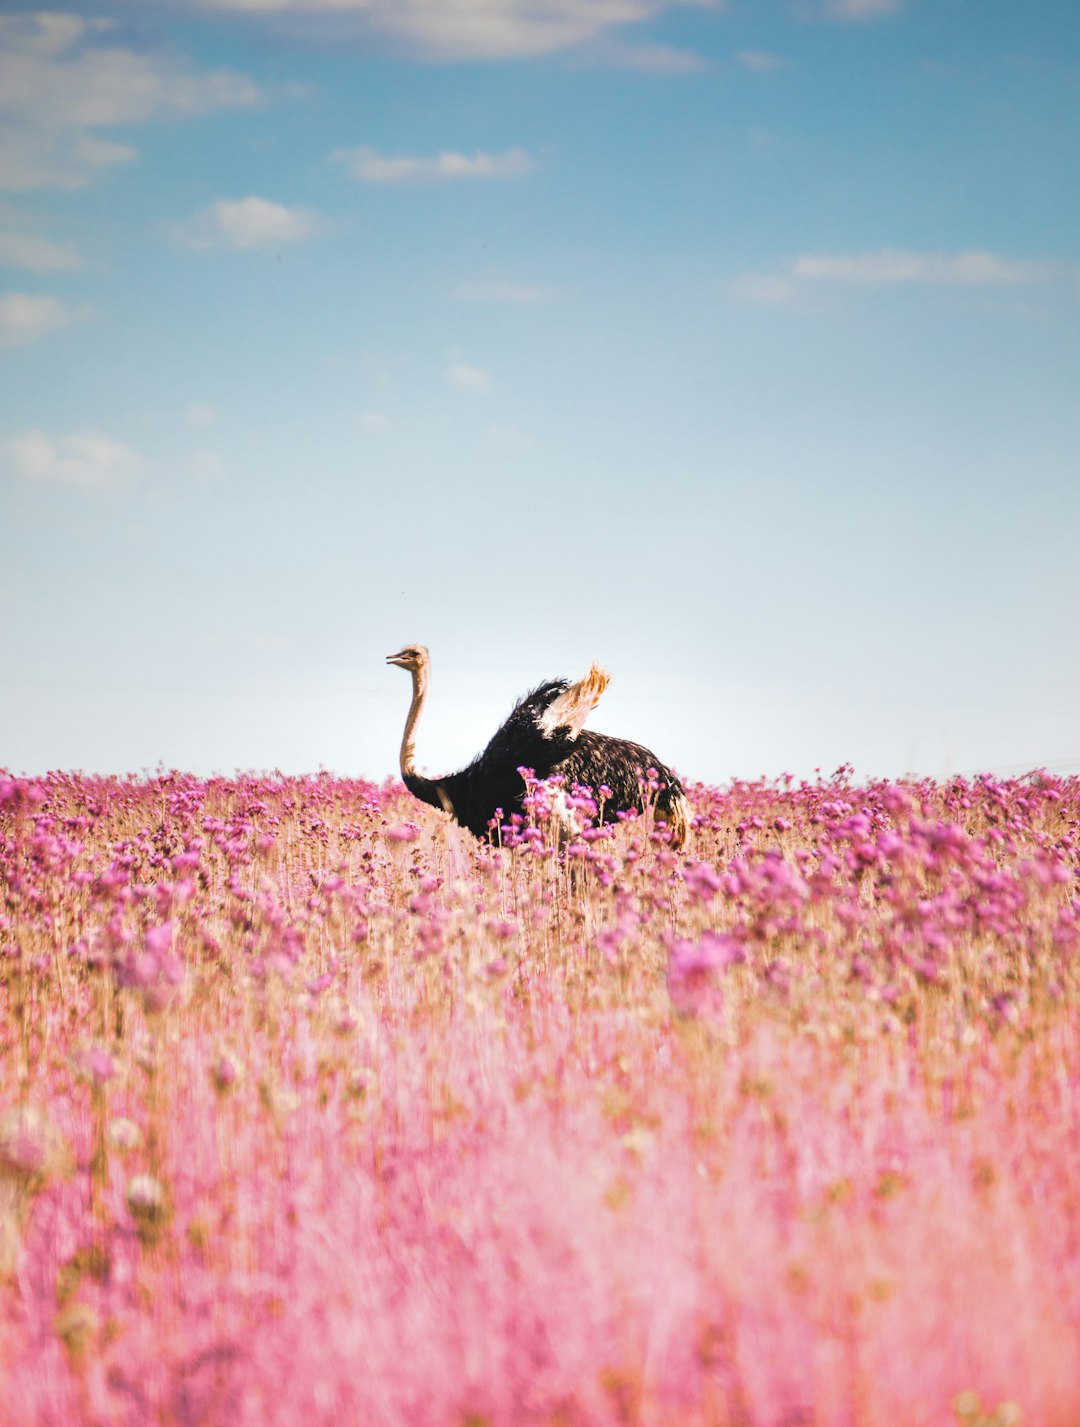  black and white bird on pink flower field under blue sky during daytime ostrich